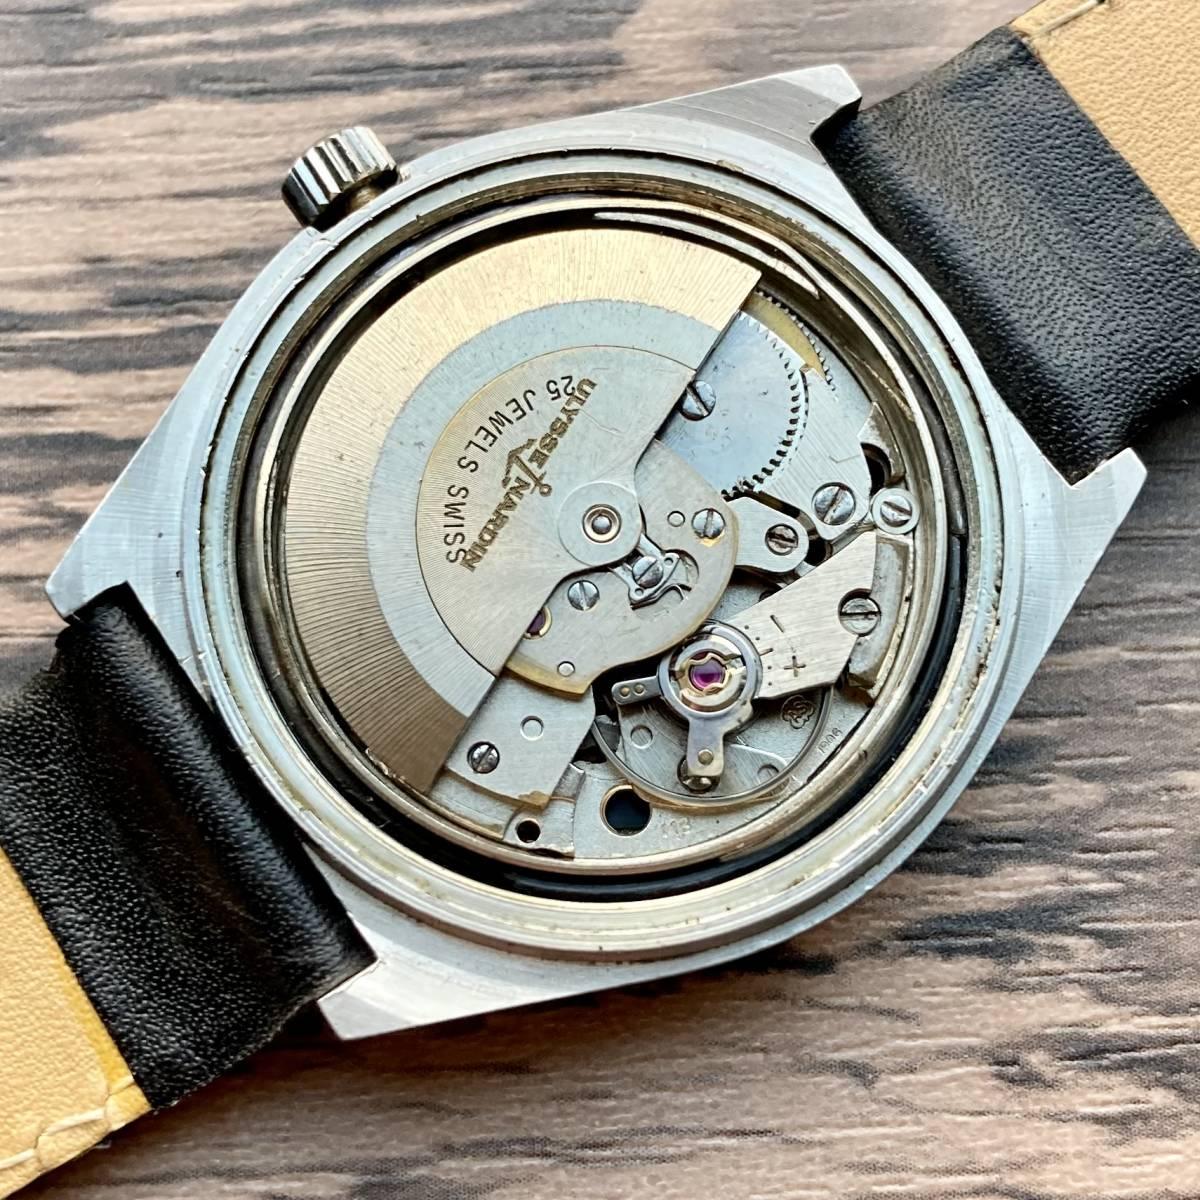 Ulysse Nardin Antique Watch 1960s Self-Winding Men's Vintage Watch Men - Murphy Johnson Watches Co.